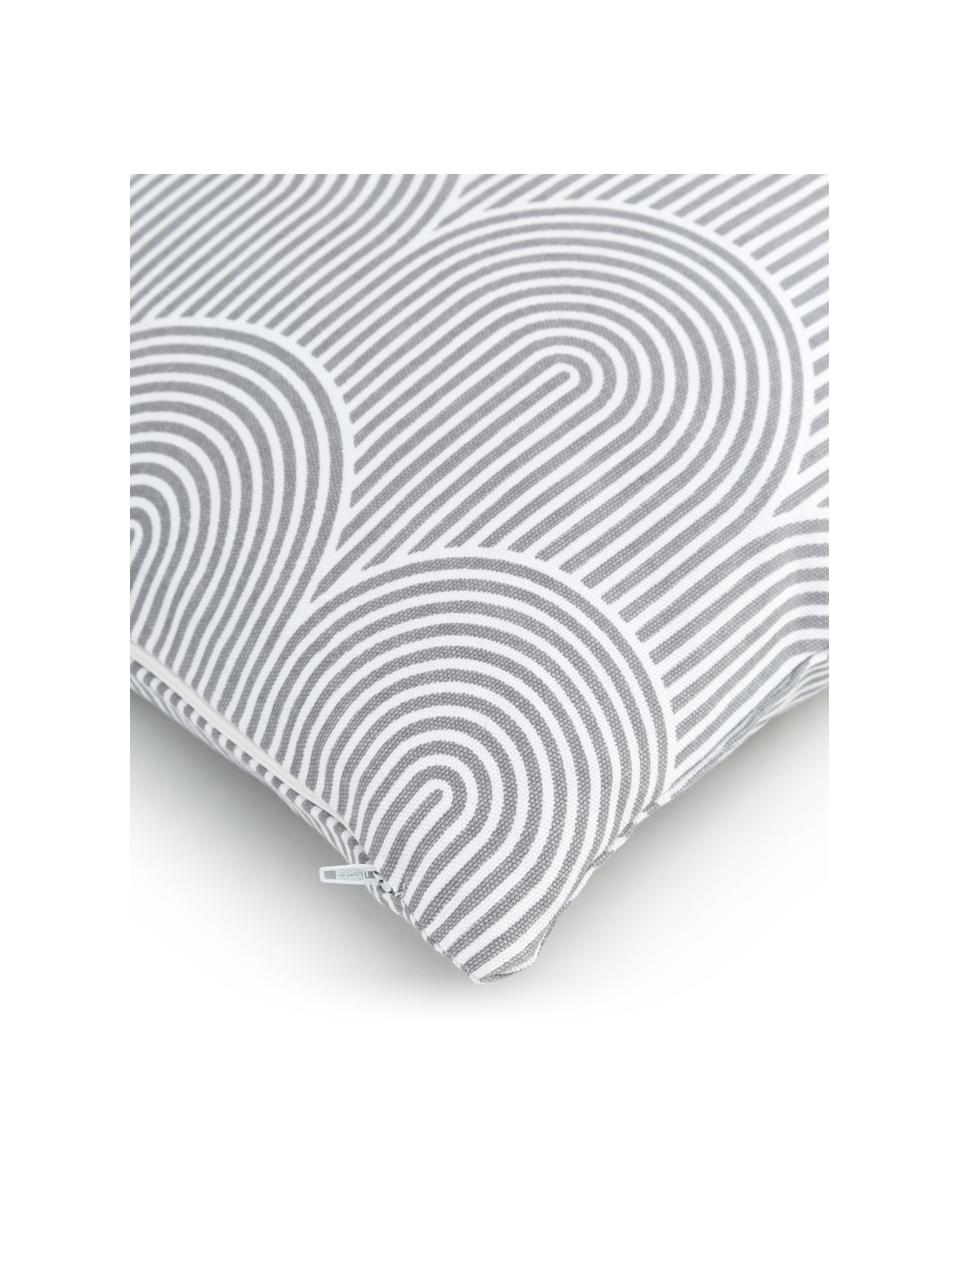 Kussenhoes Arc in lichtgrijs/wit, 100% katoen, Grijs, B 45 x L 45 cm